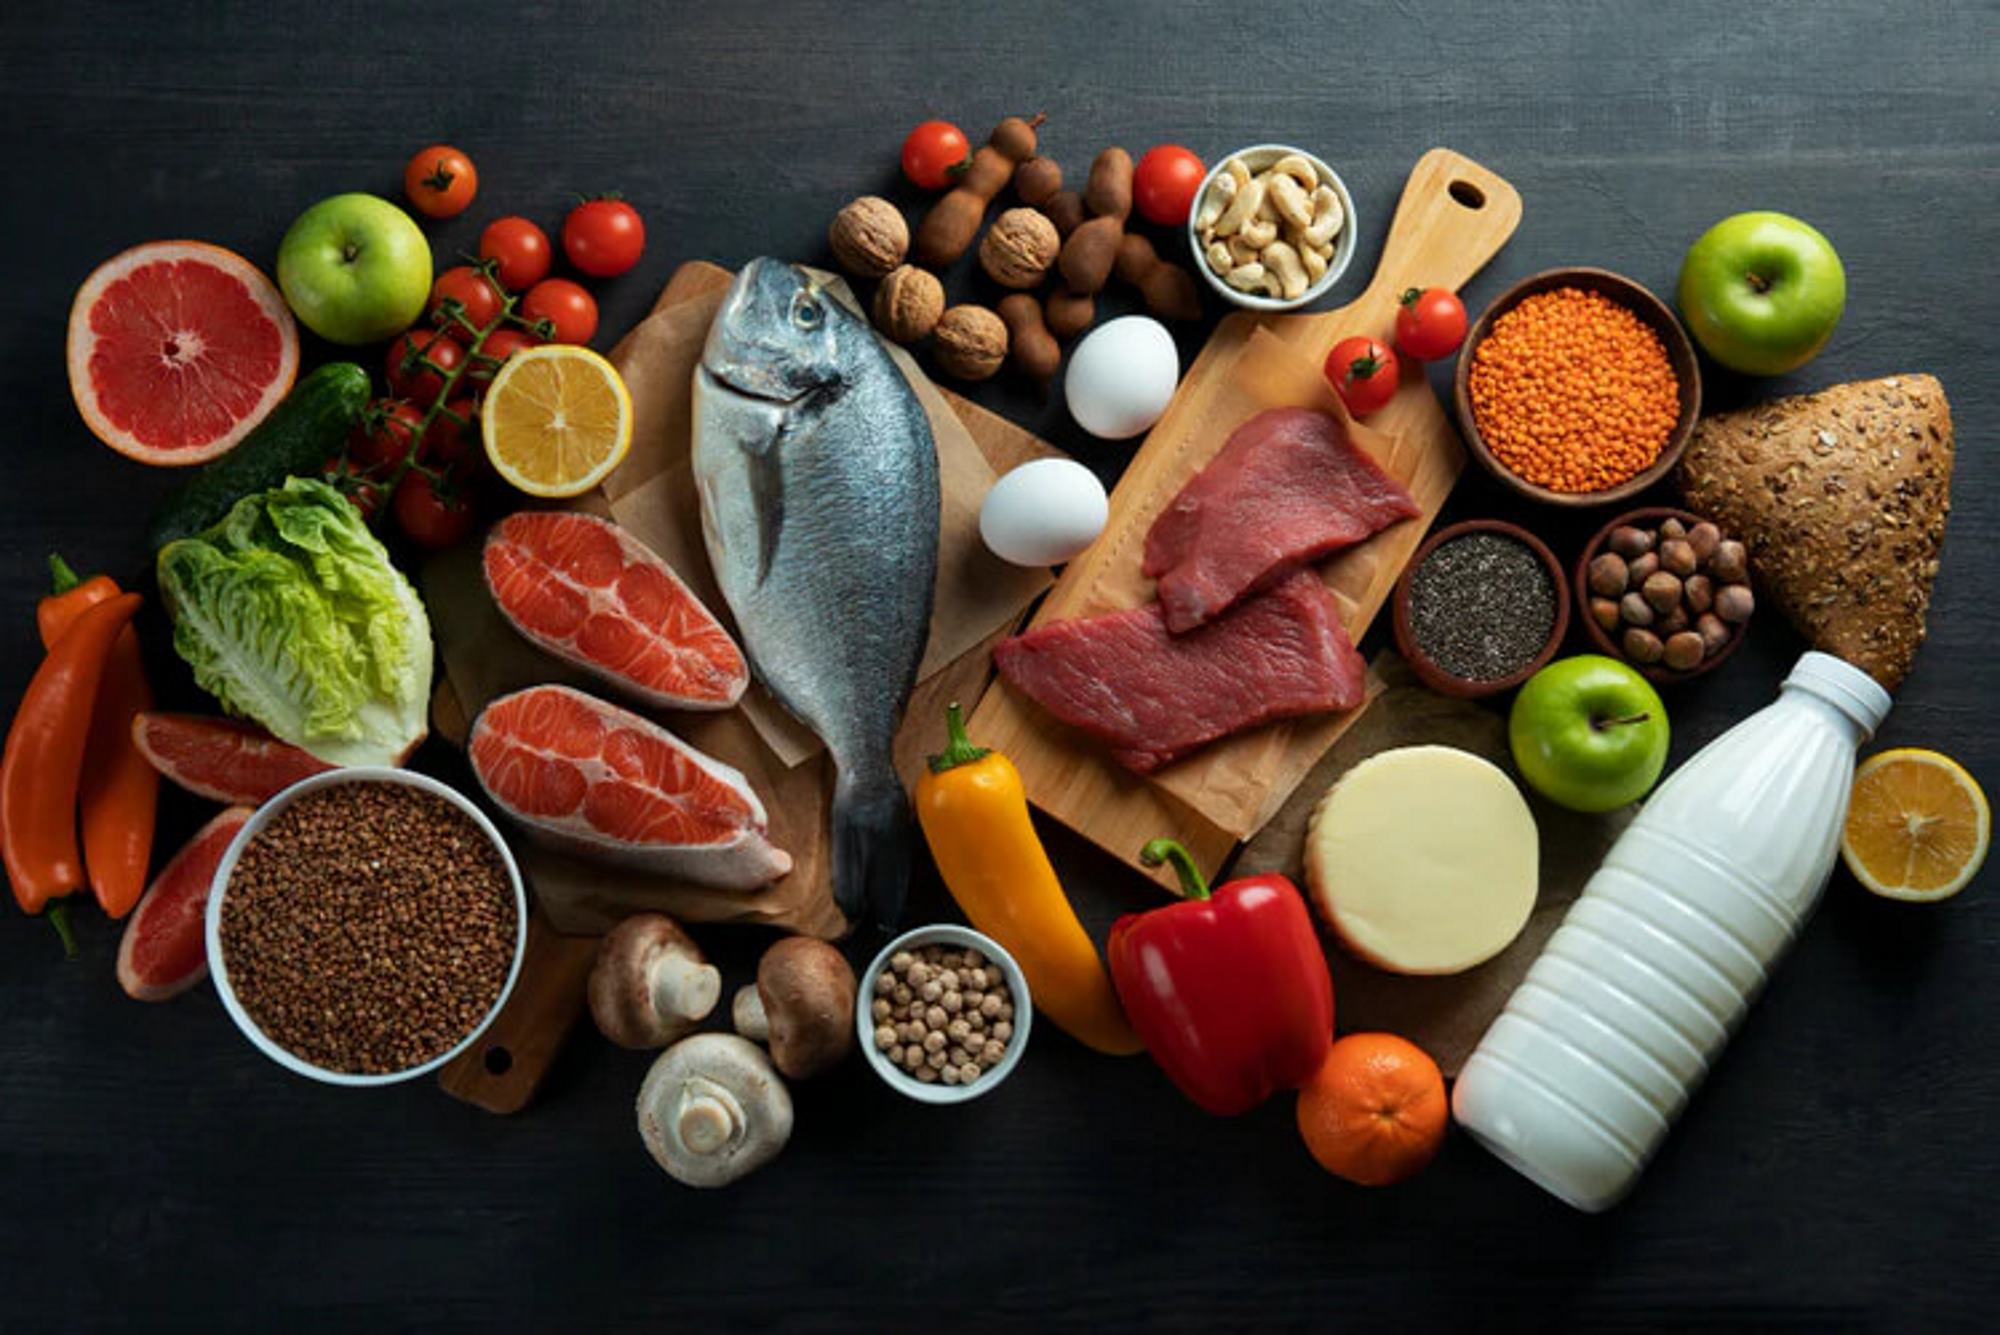 Healthy foods and liposomal vitamins.